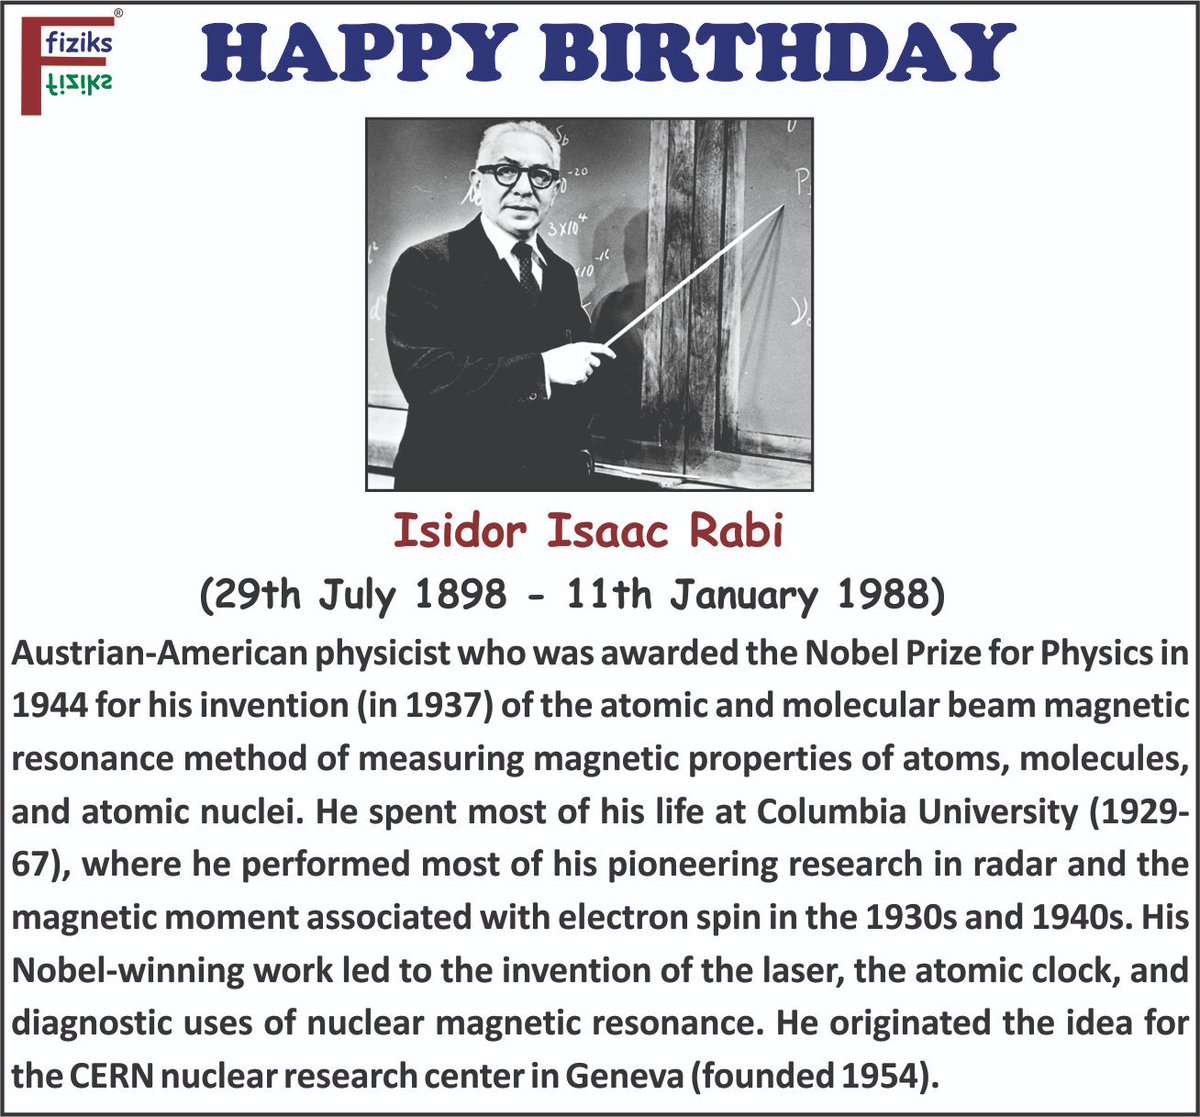 Happy Birthday #IsidorIsaacRabi